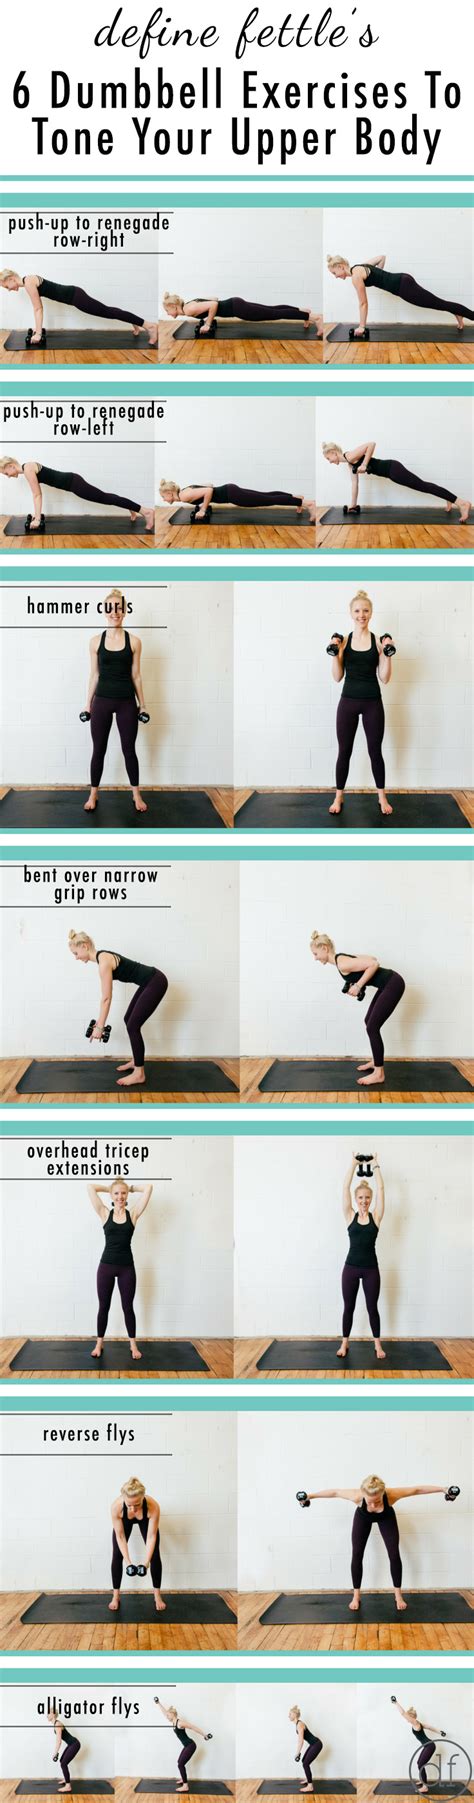 Best Upper Body Workout Using Dumbbells Eoua Blog